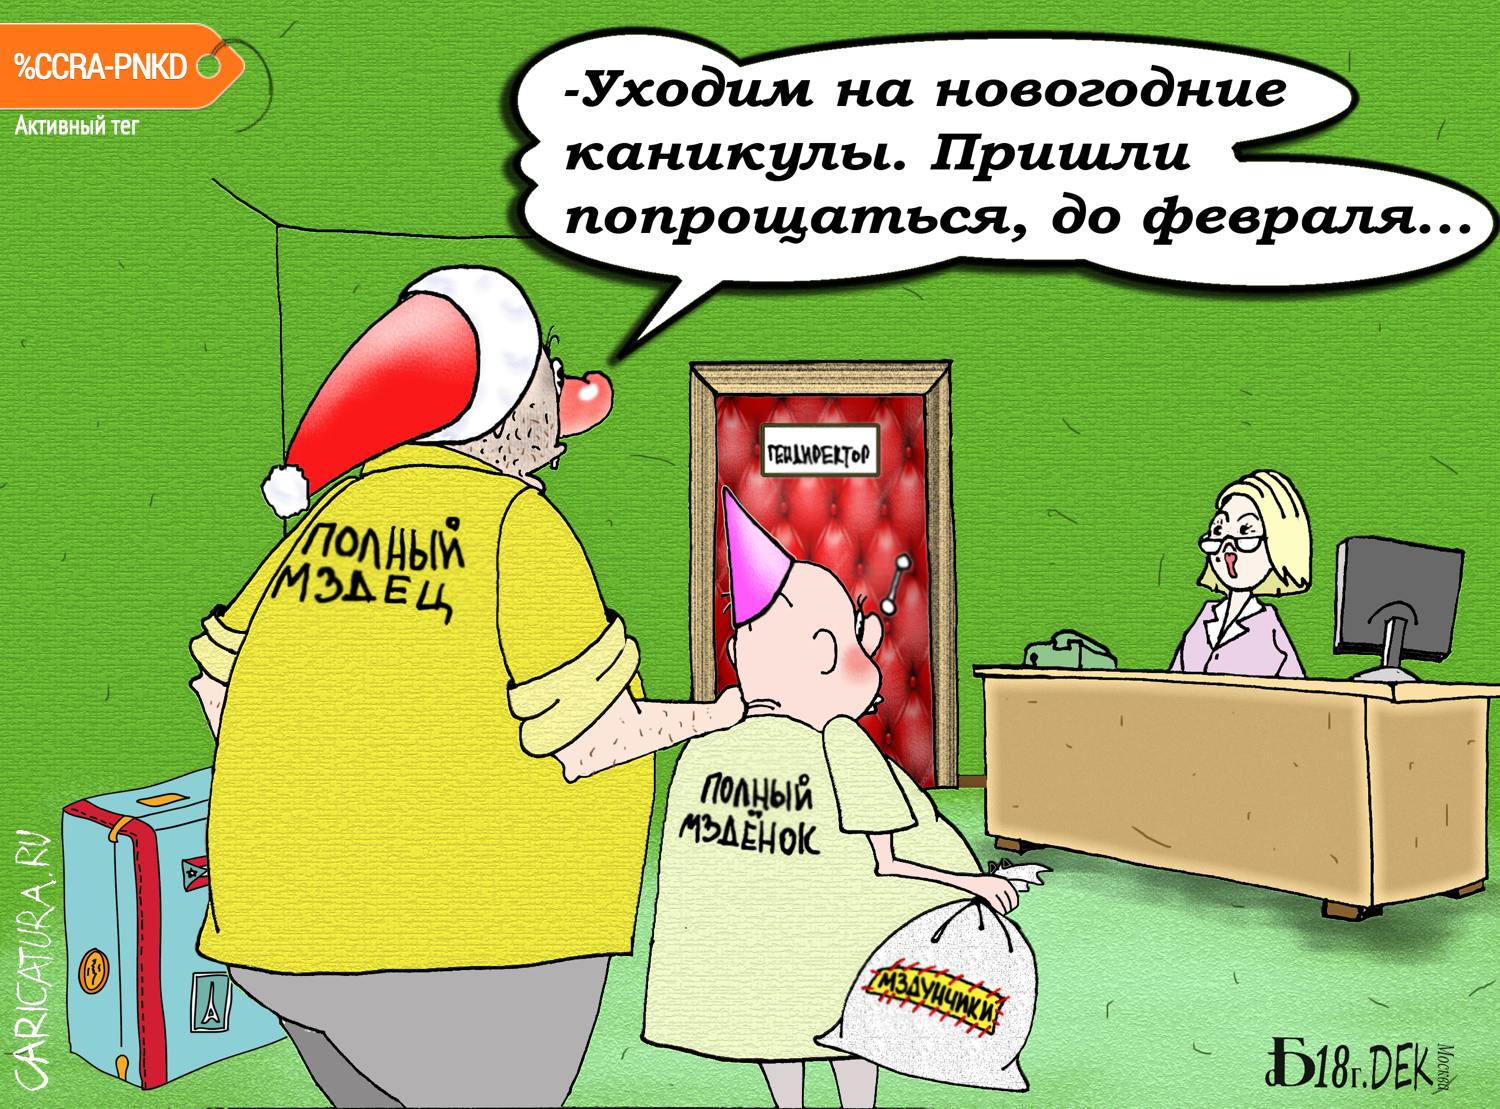 Карикатура "Про мздунов", Борис Демин